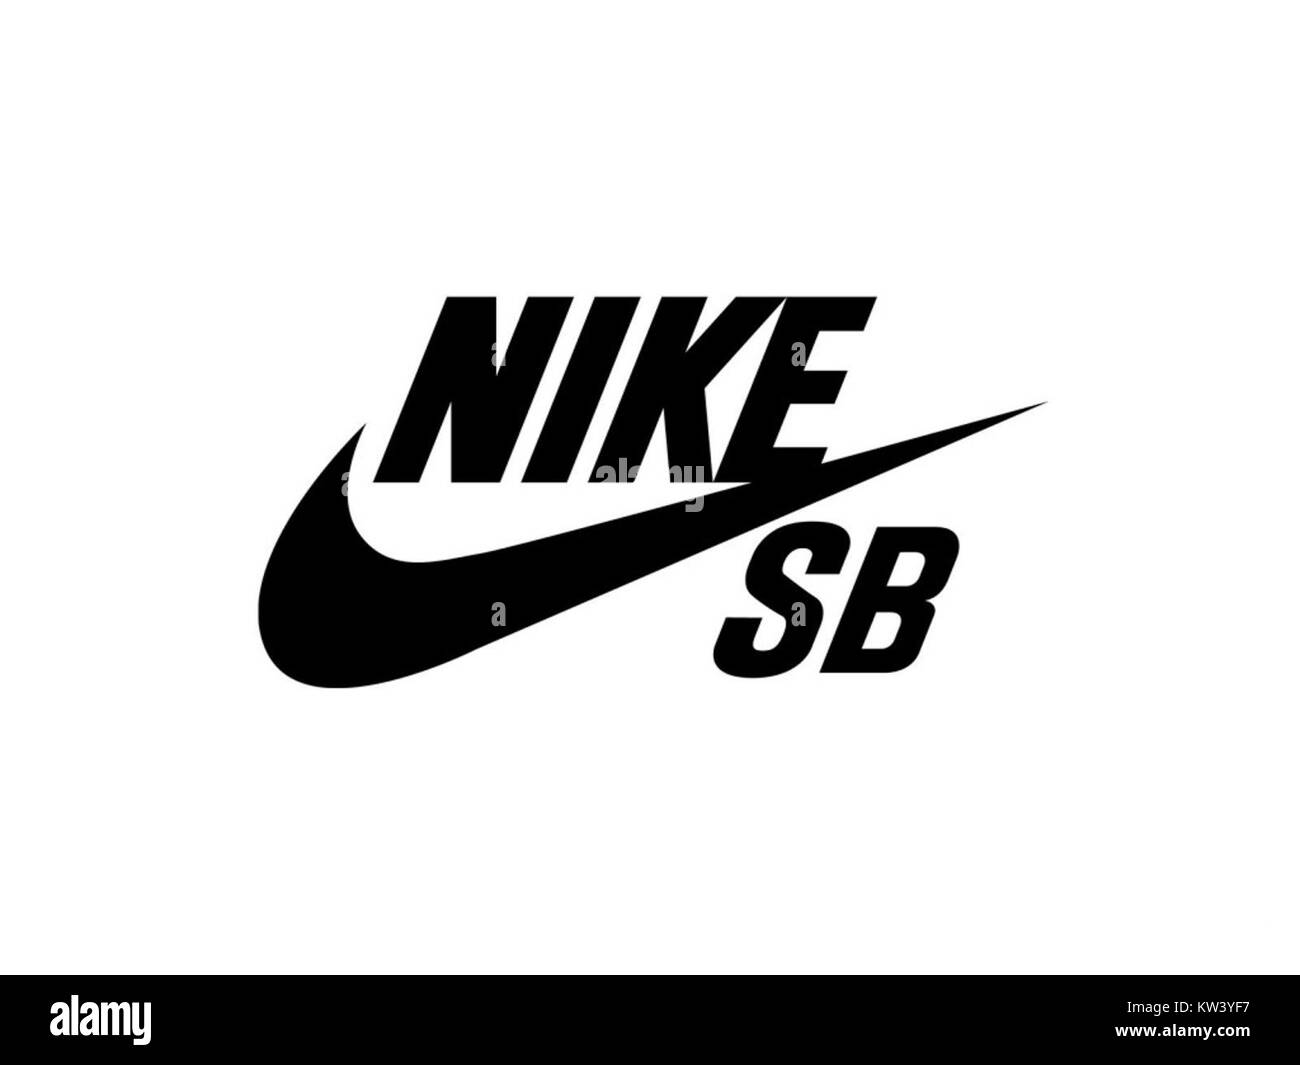 Nike SB logo Stock Photo - Alamy